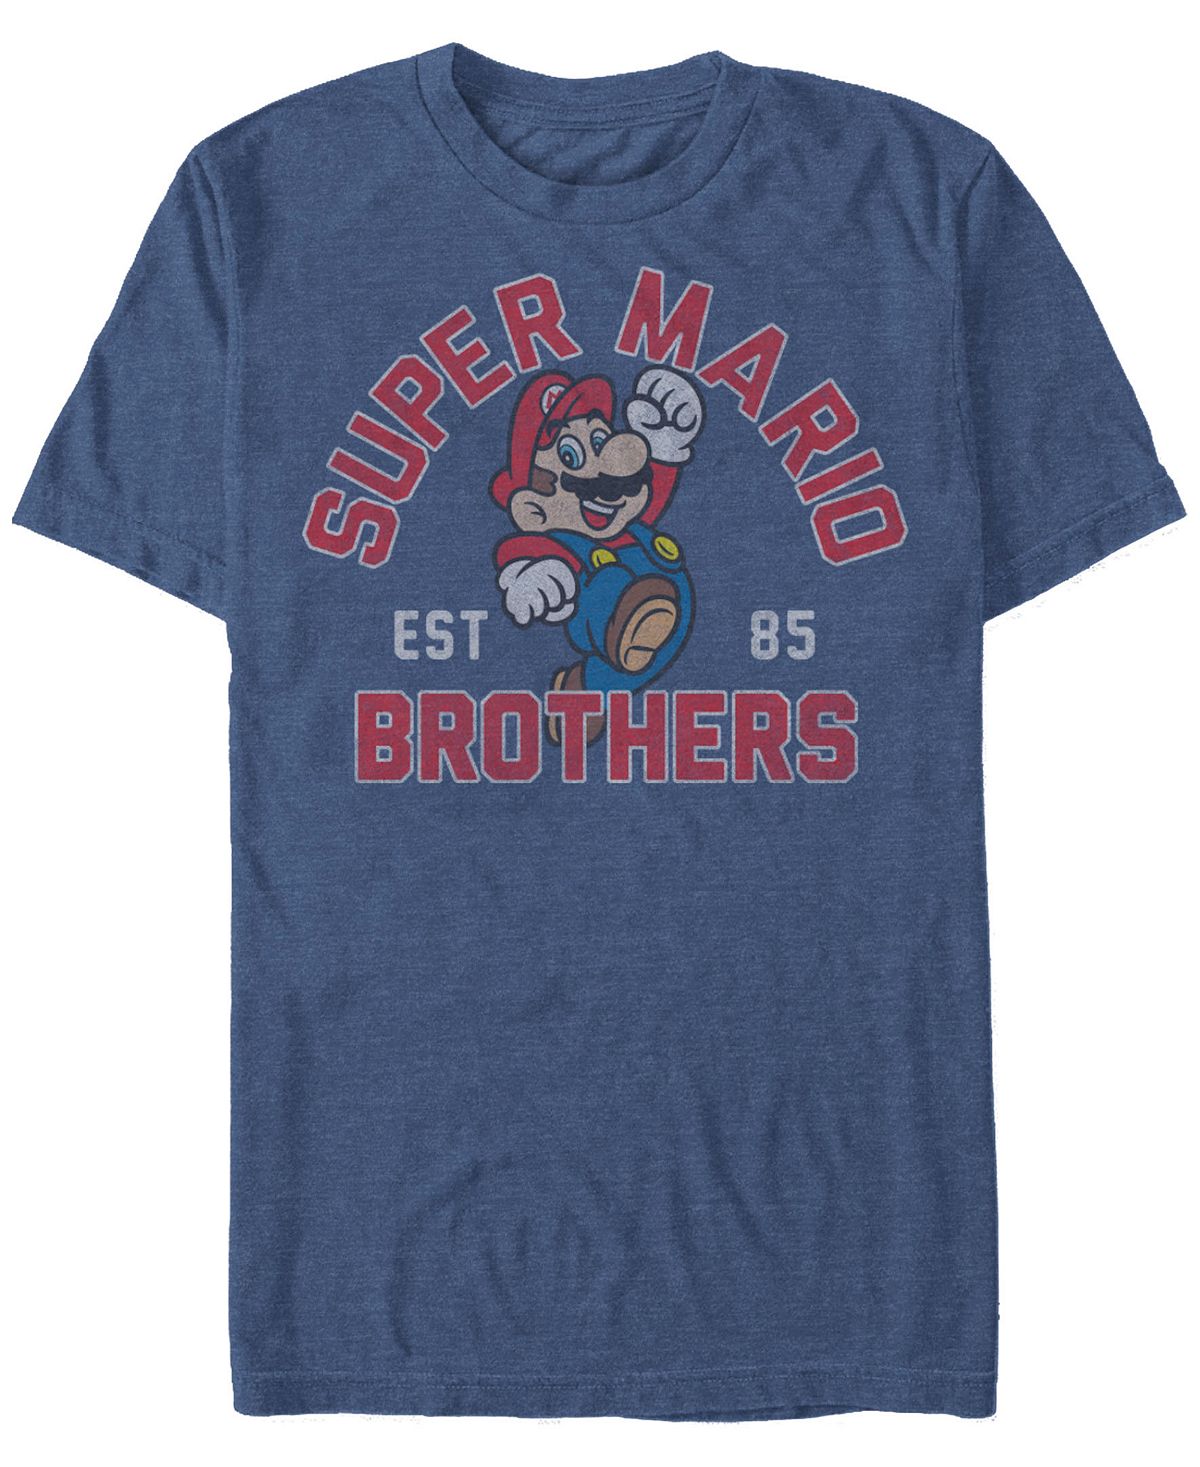 Мужская футболка с коротким рукавом nintendo super mario brothers created 1985 Fifth Sun, мульти